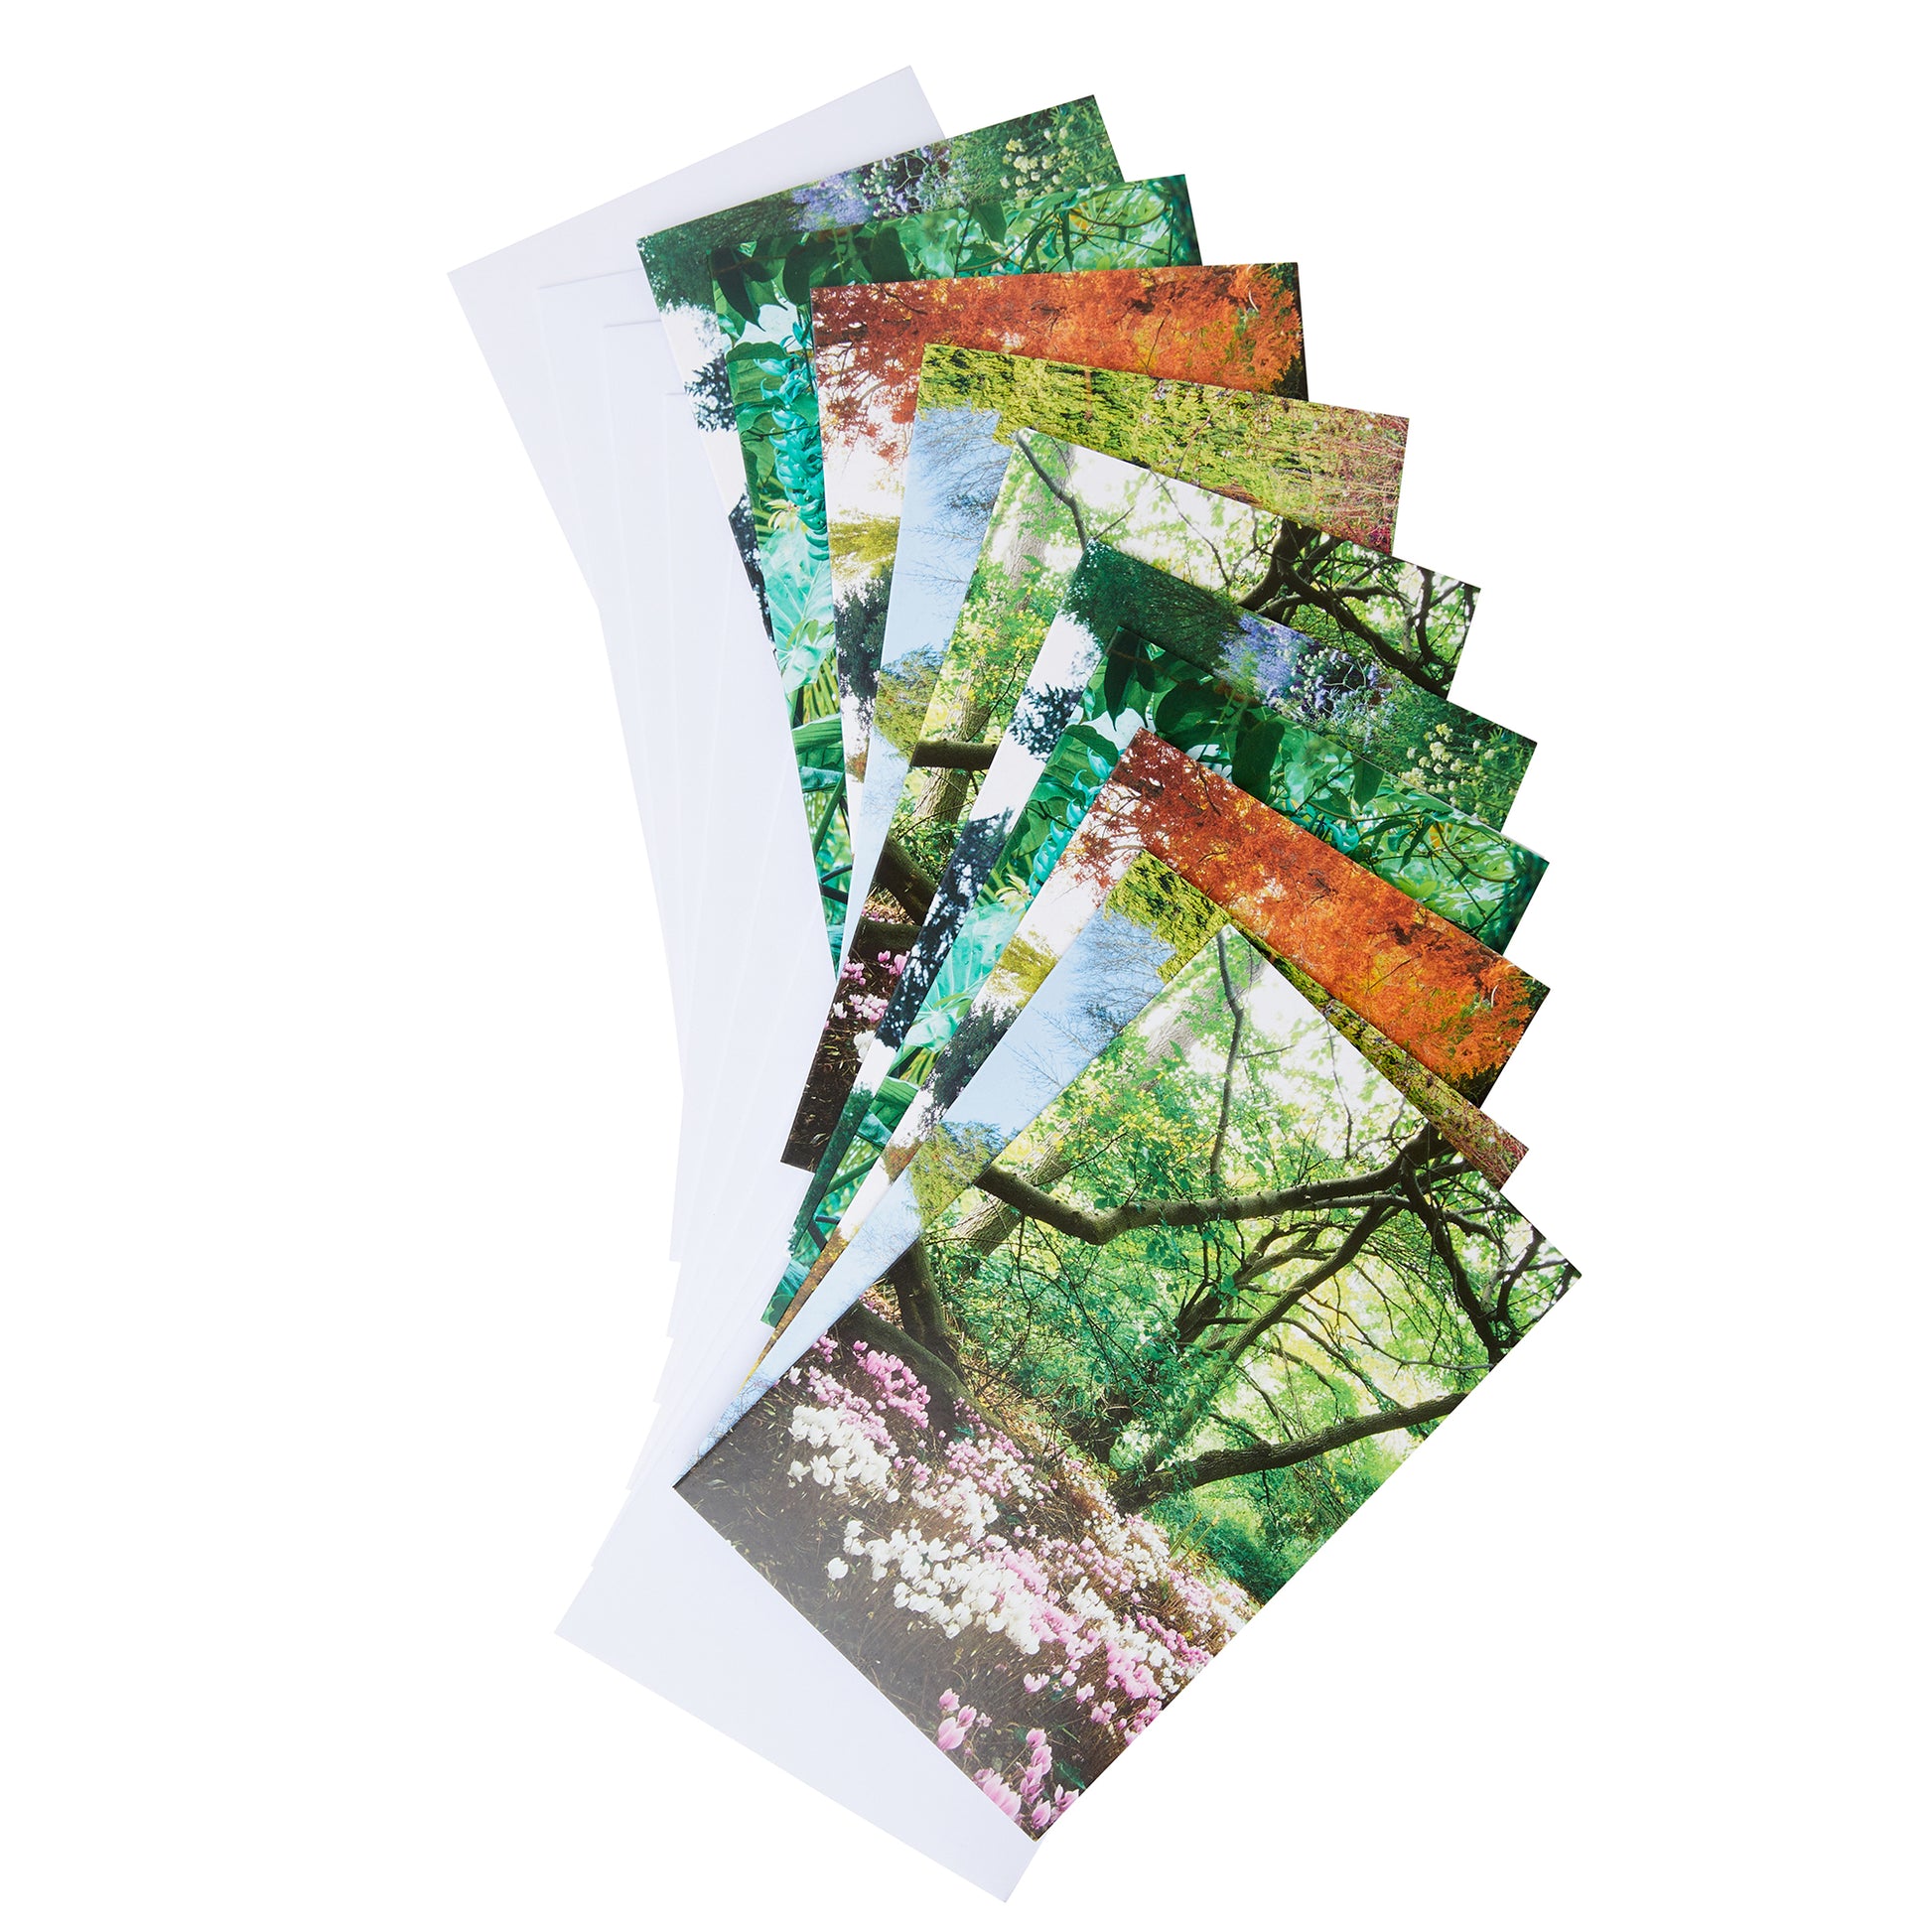 Cards from Cambridge University Botanic Garden notecard pack